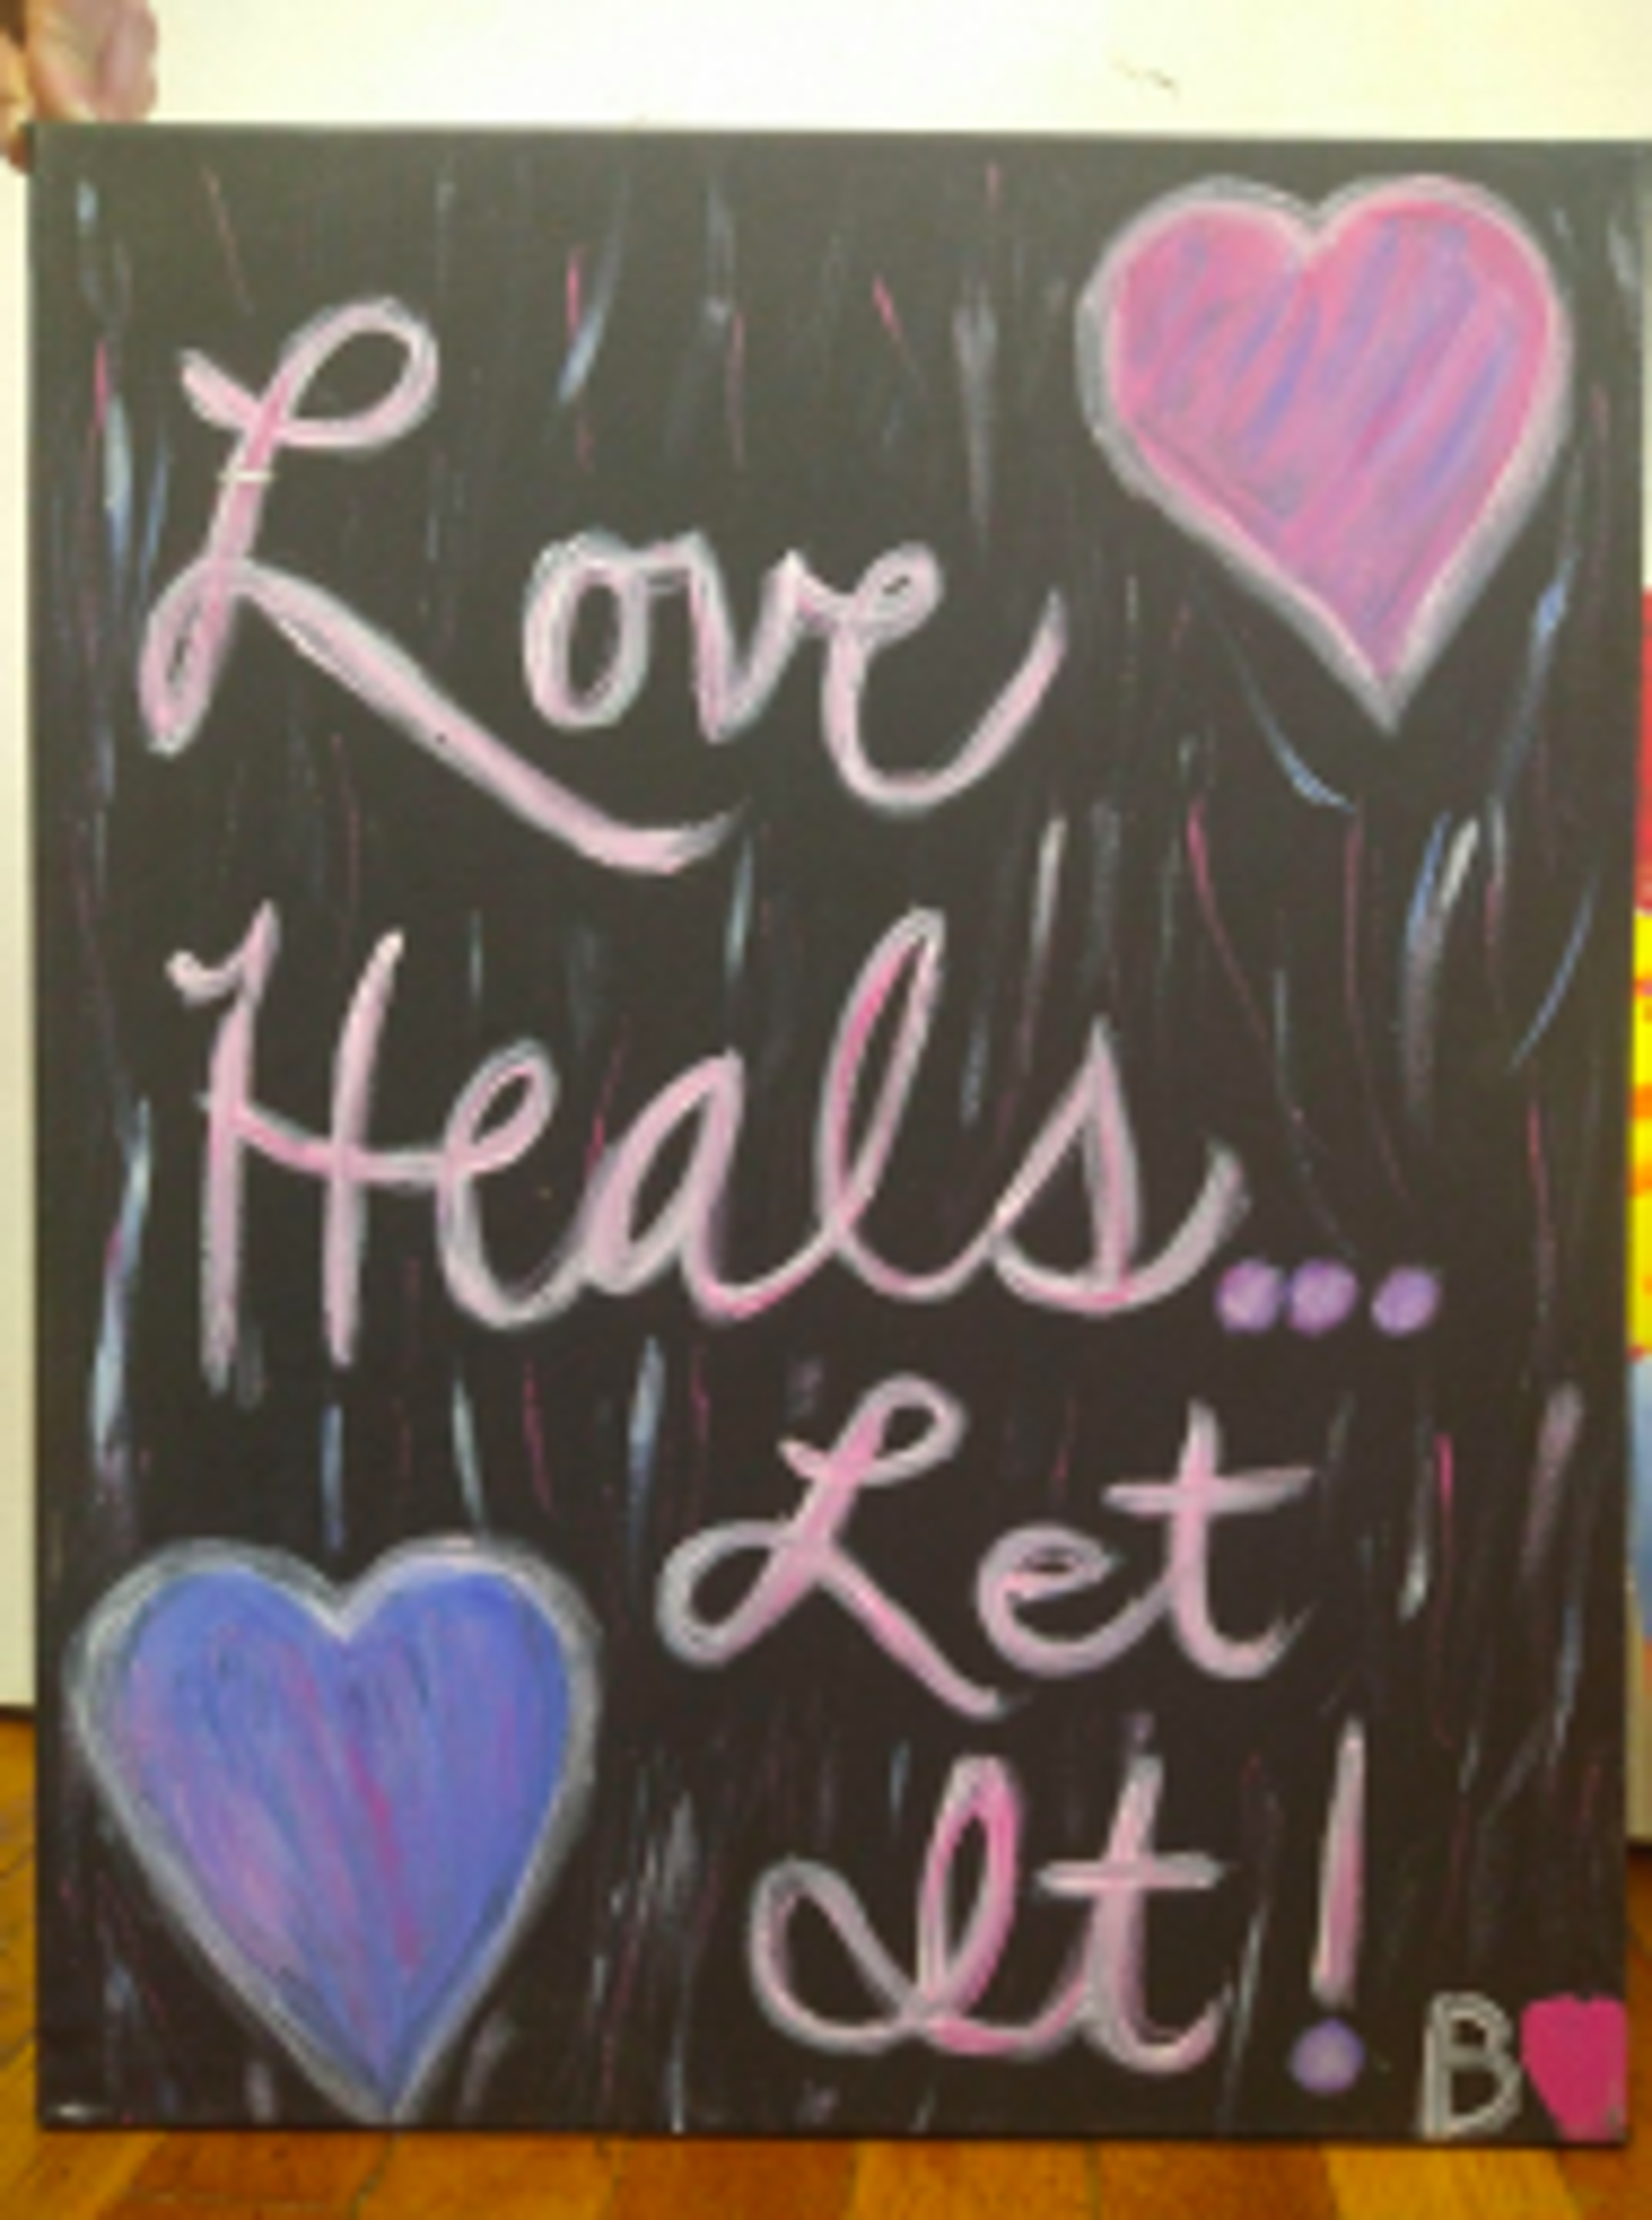 “Love Heals” by Tamara Glenn